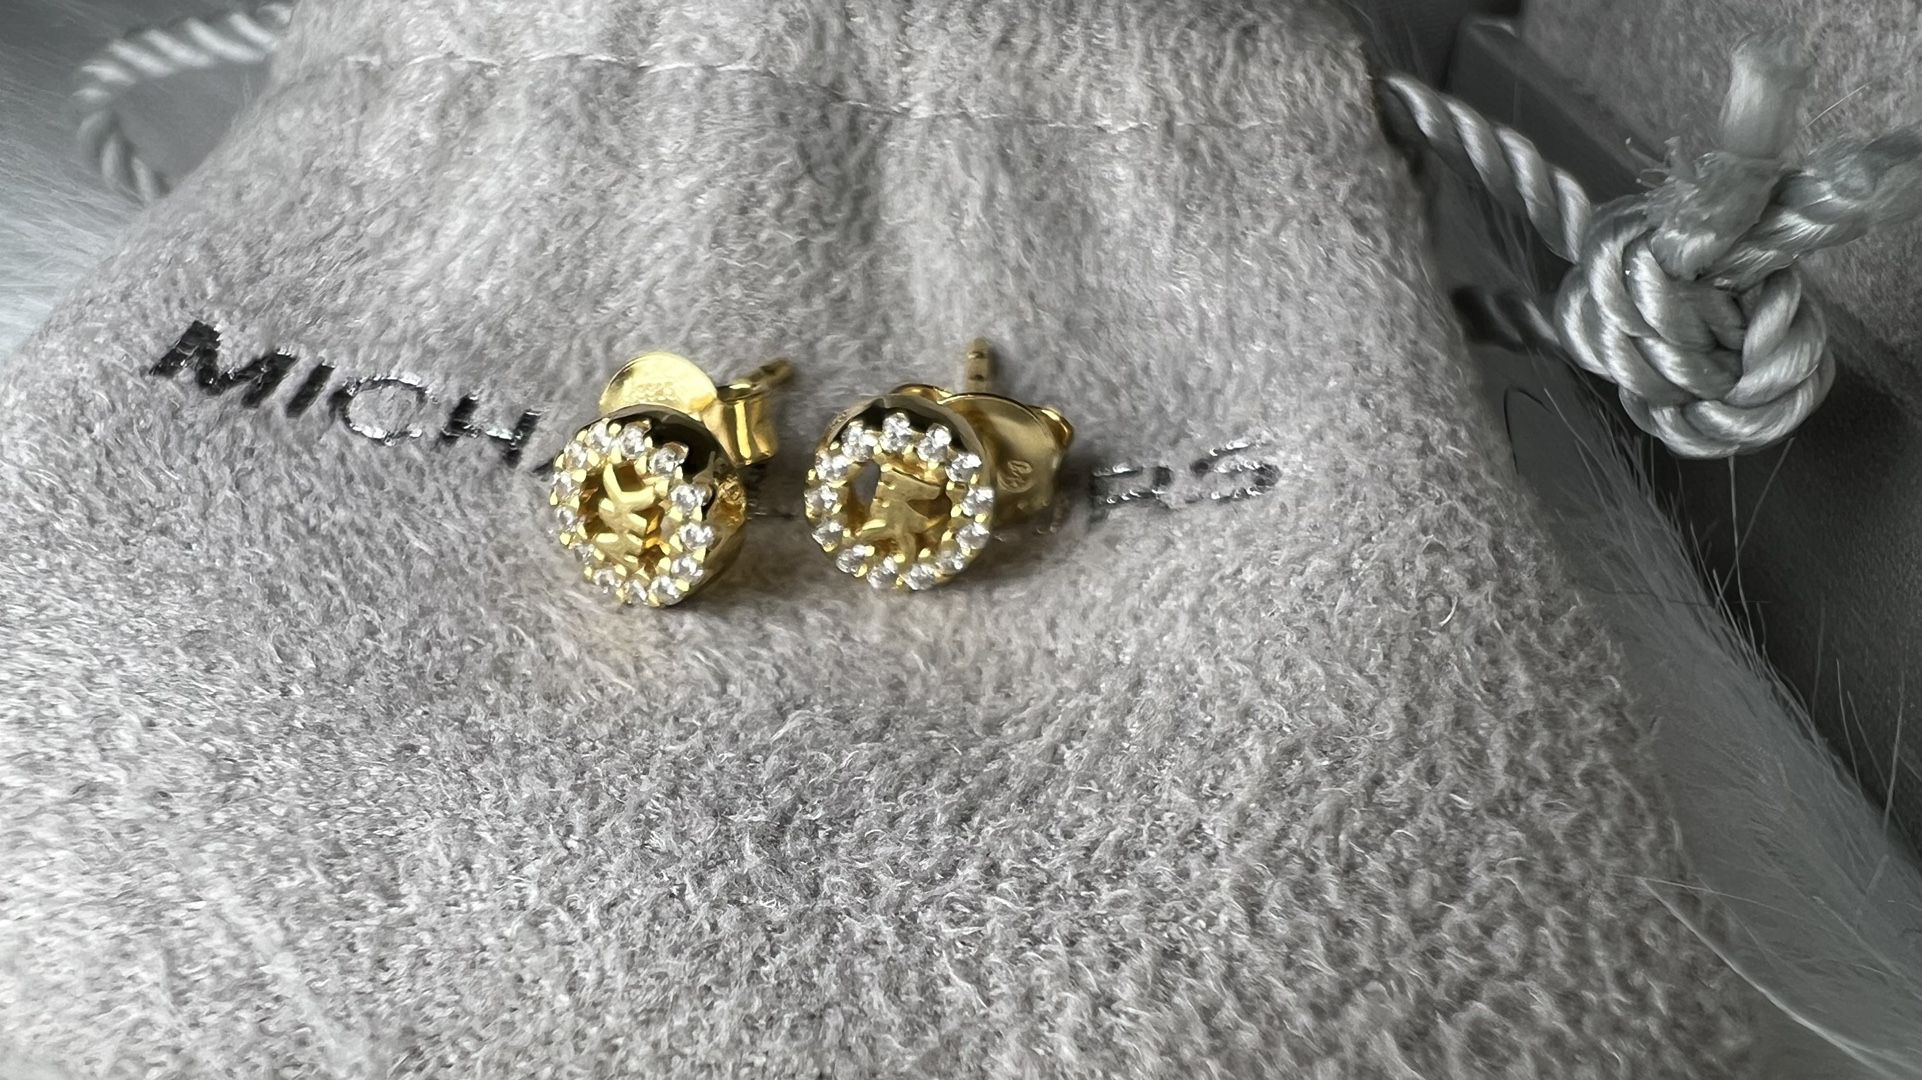 Michael Kors Earrings